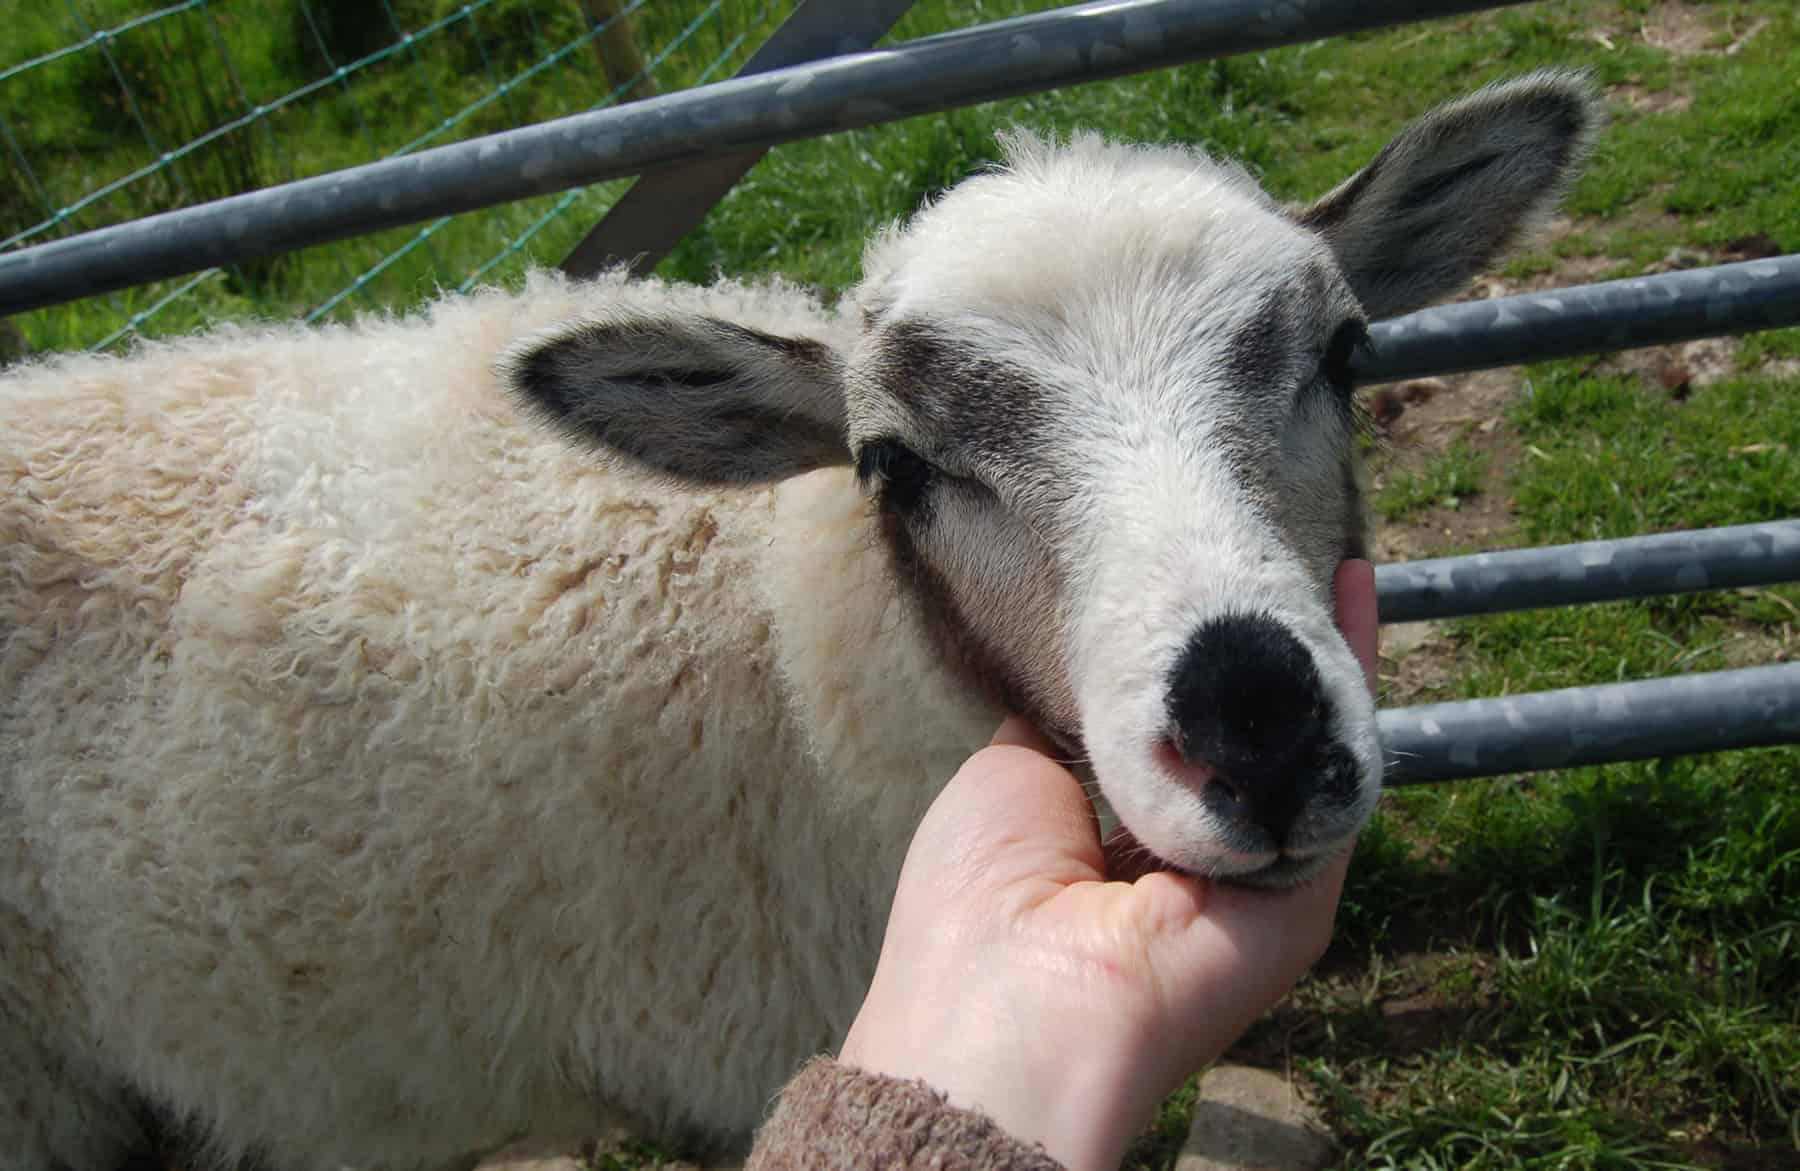 patchwork sheep pet sheepsmudge cute lamb golden soay cross shetland jacob sheep